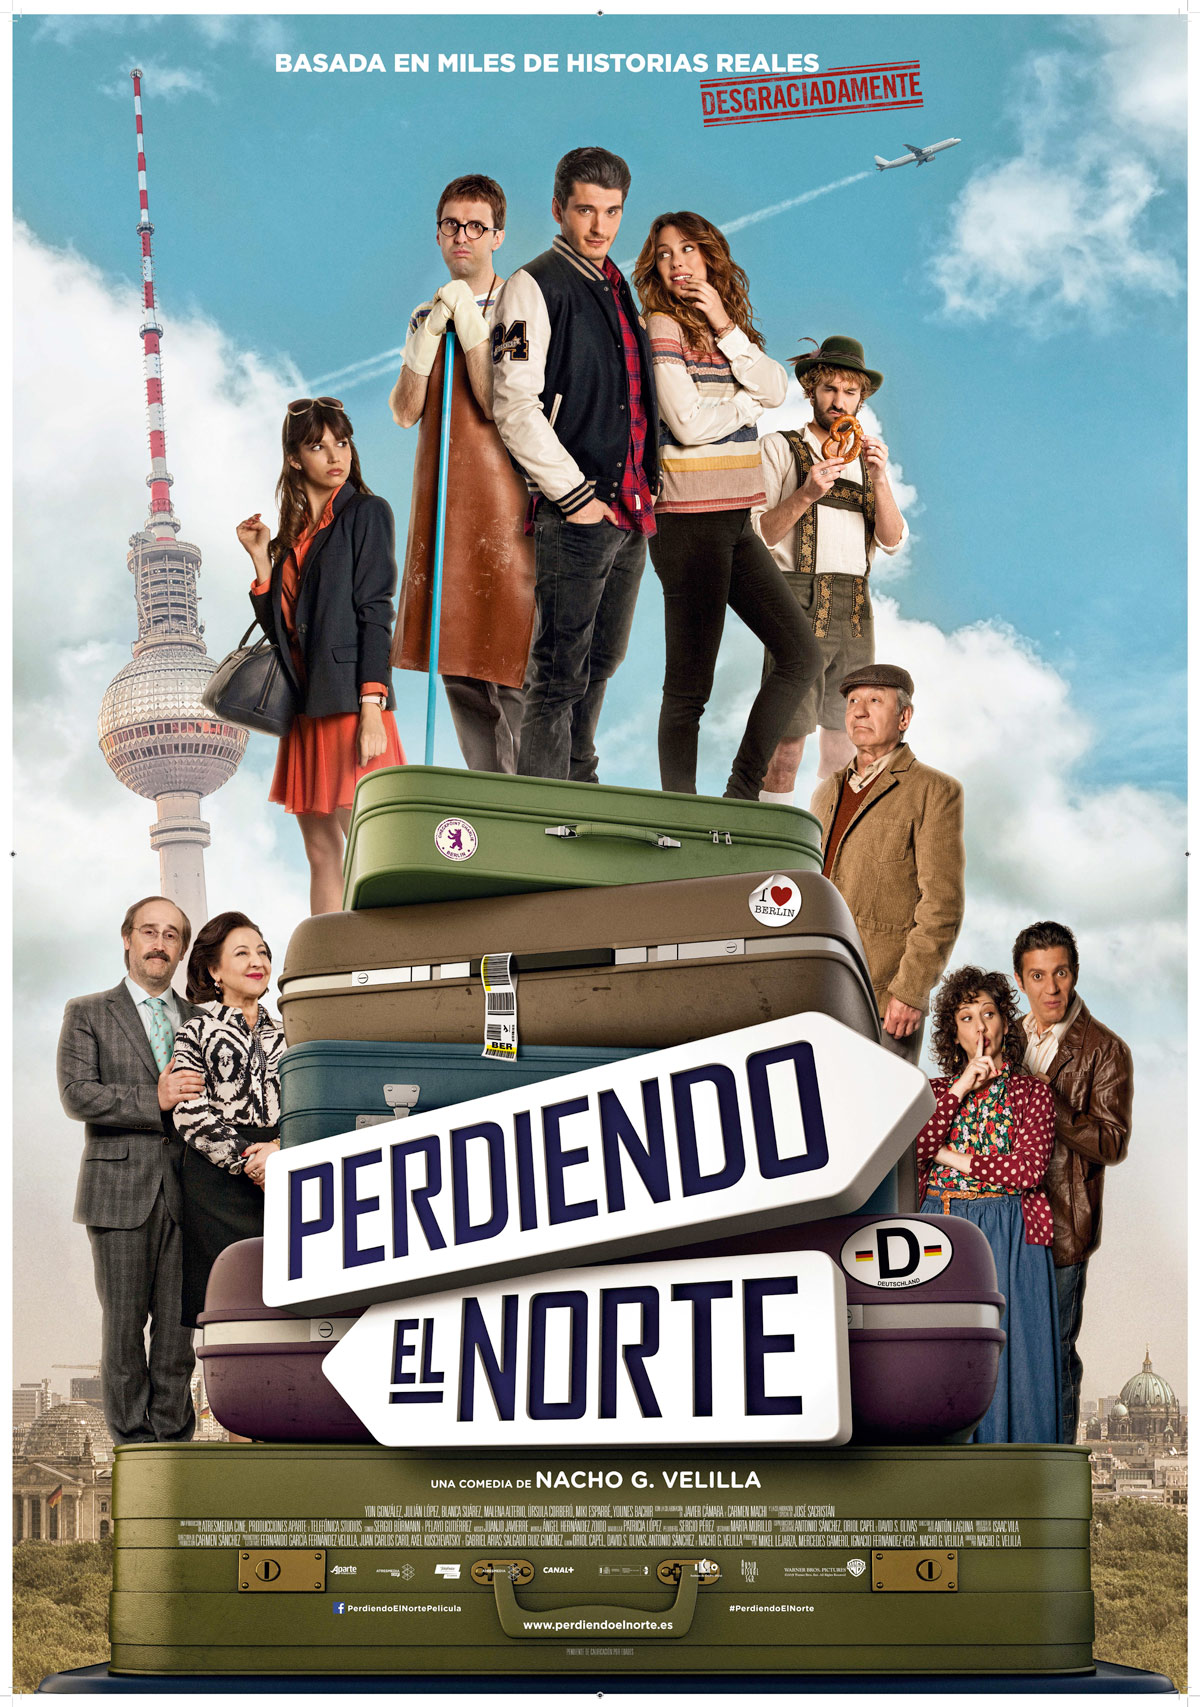 Spanish movies on Netflix